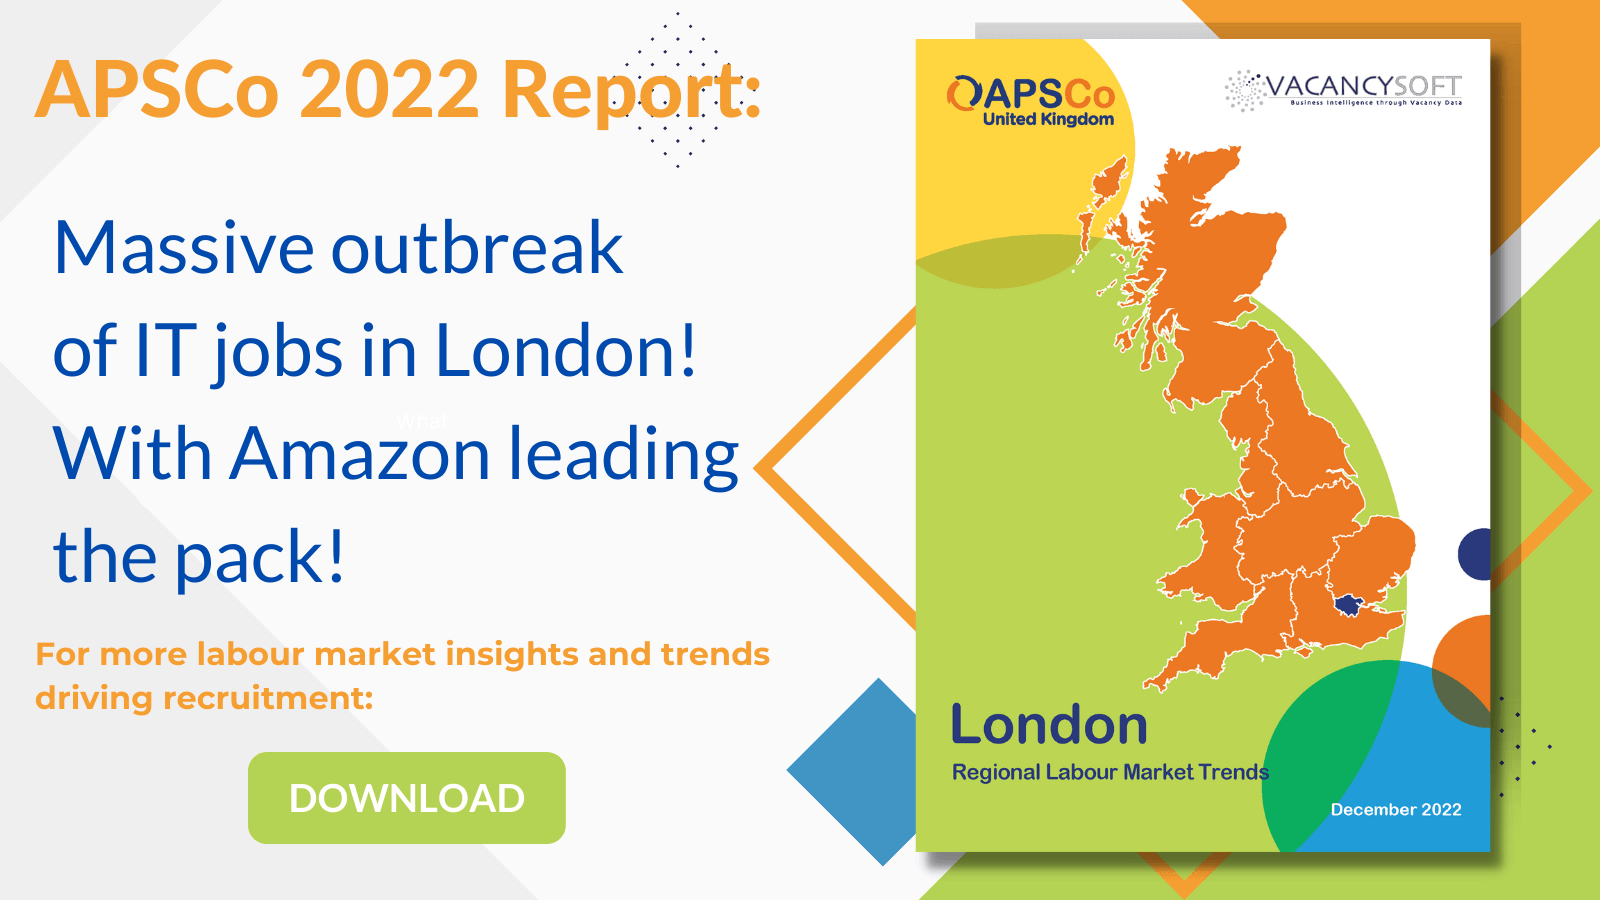 London — Regional Labour Market Trends, December 2022